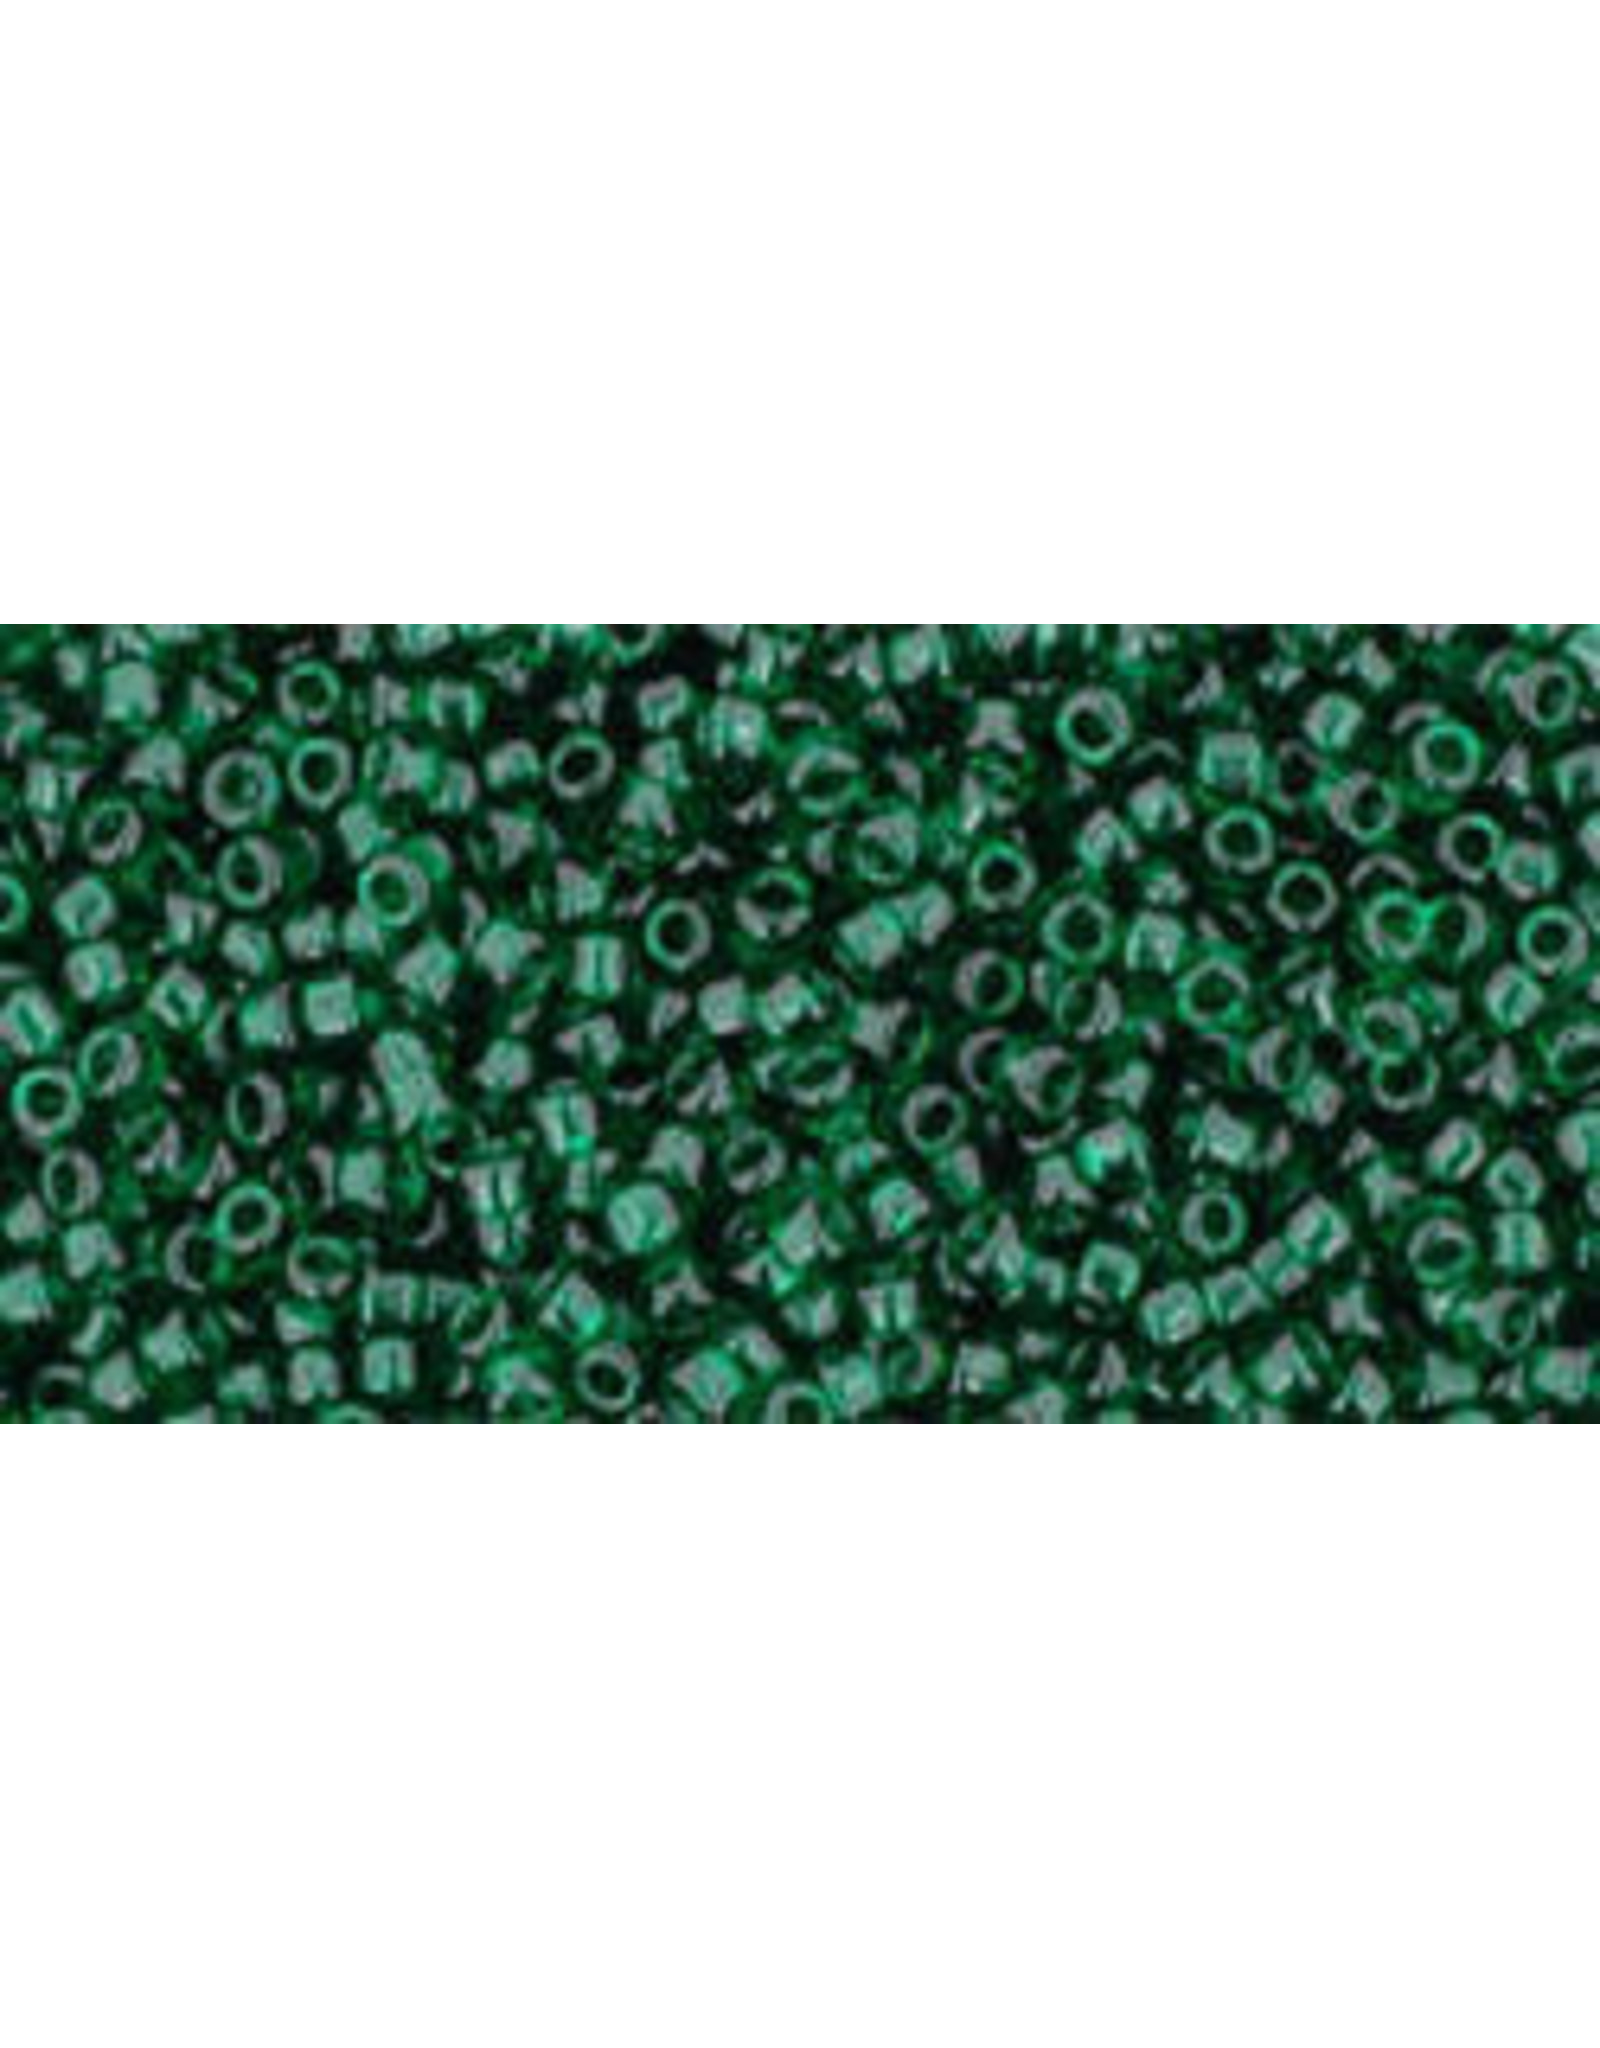 Toho 939 15 Round 5g   Transparent Emerald Green